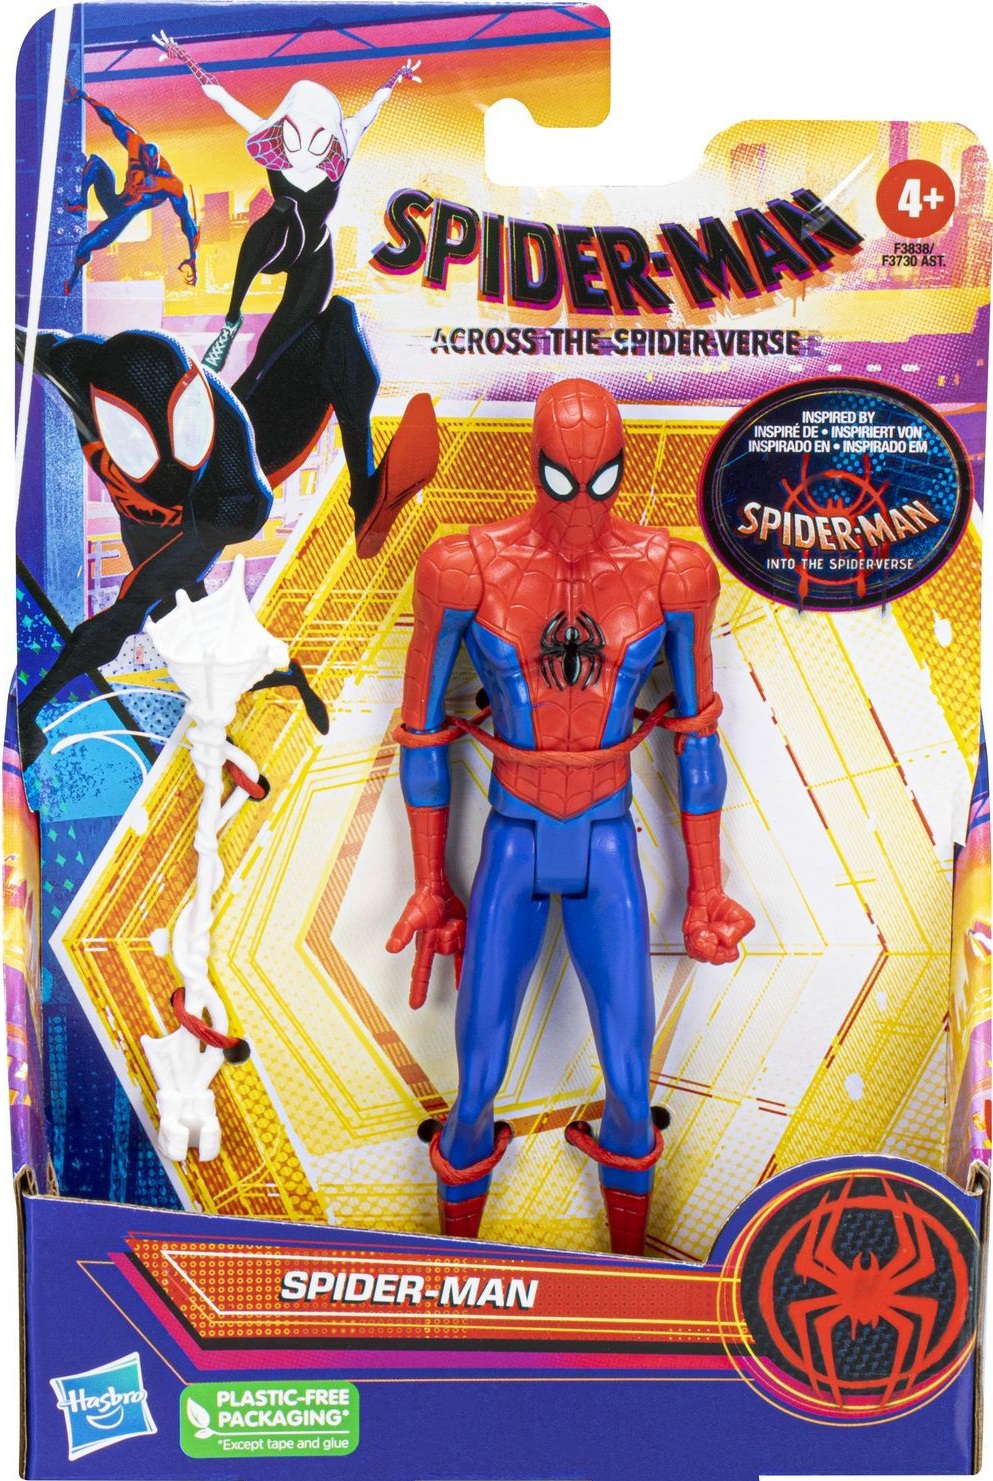 https://m.caverne-des-jouets.com/ori-figurine-articulee-spiderman-15-cm-across-the-spiderverse-spider-man-hasbro-25367.jpg